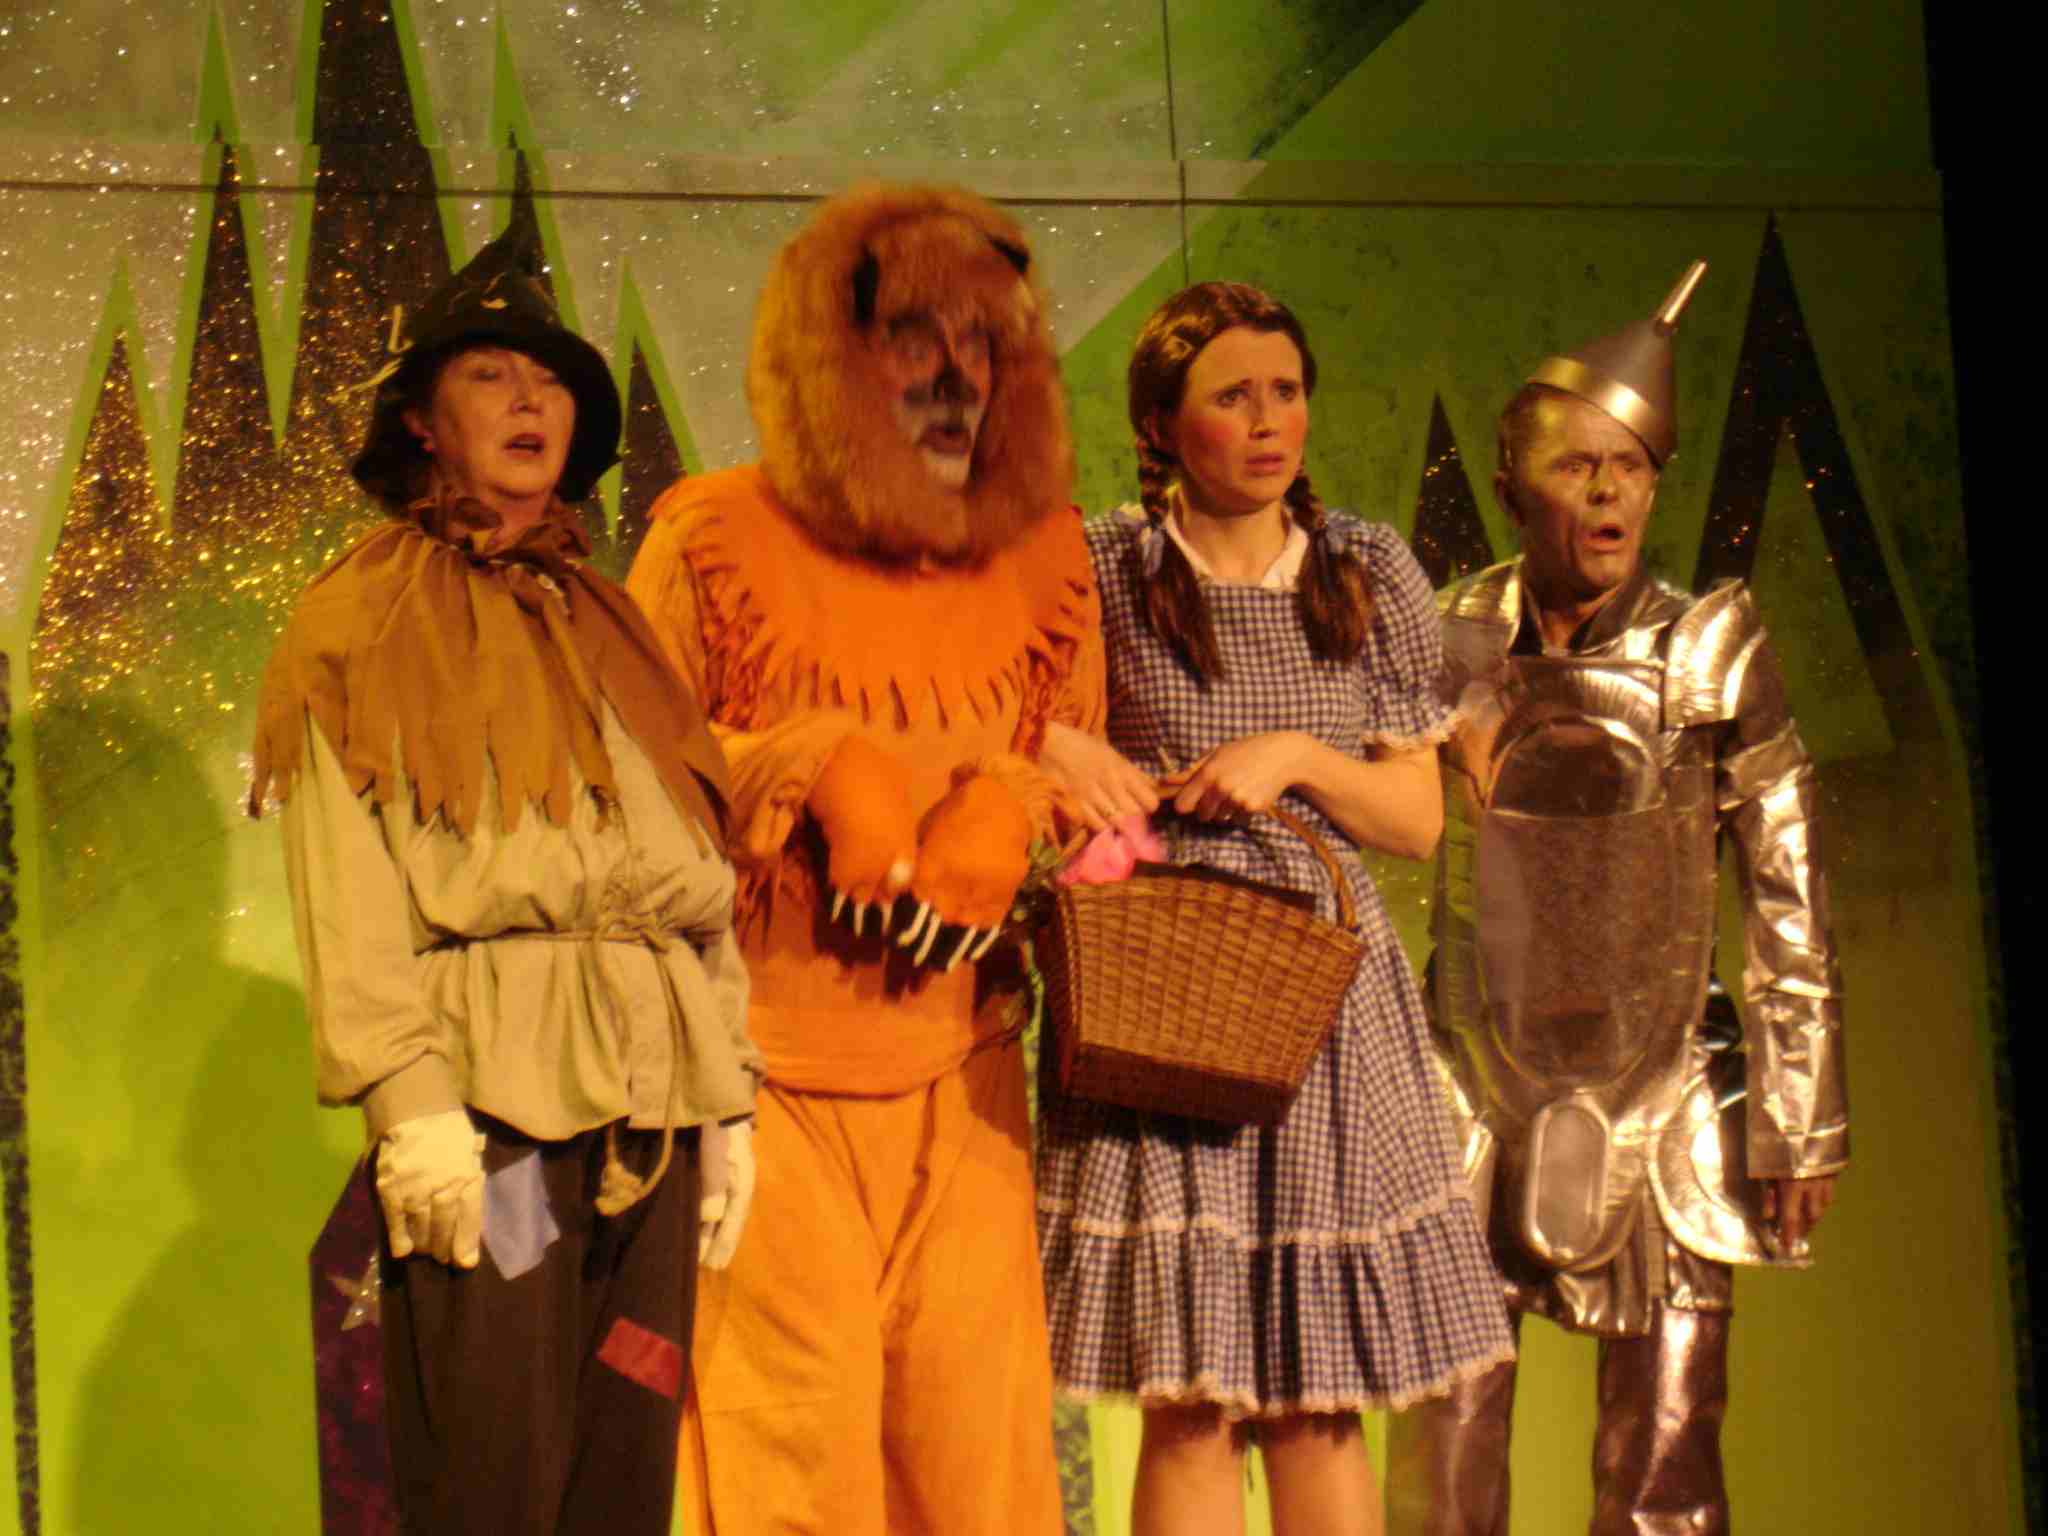 Wizard of Oz photo